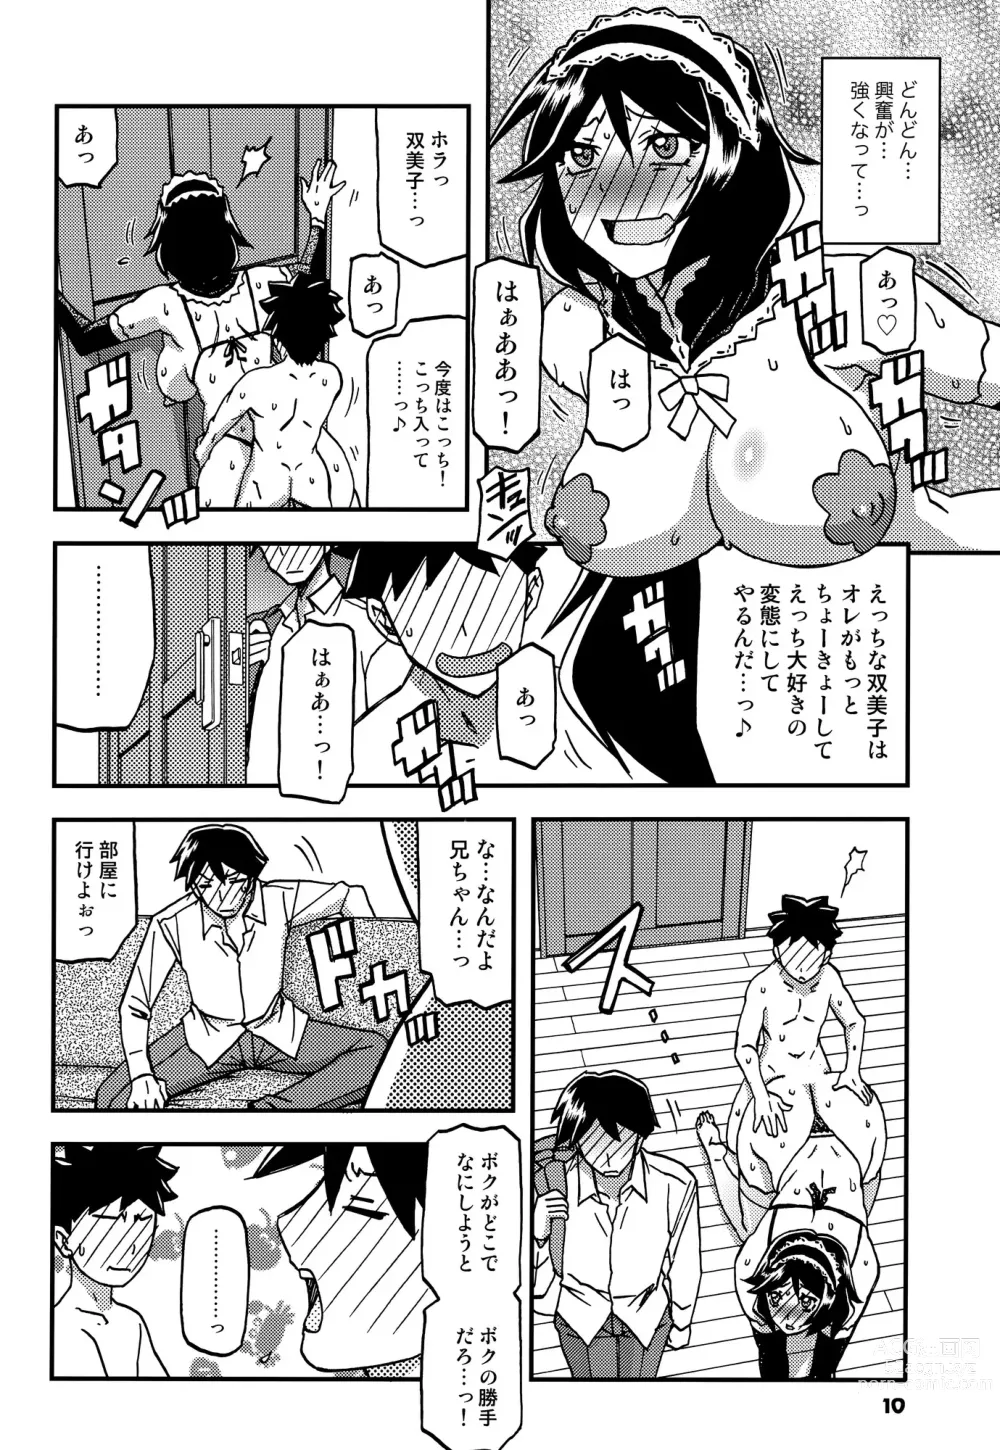 Page 9 of doujinshi Akebi no Mi - Fumiko CONTINUATION